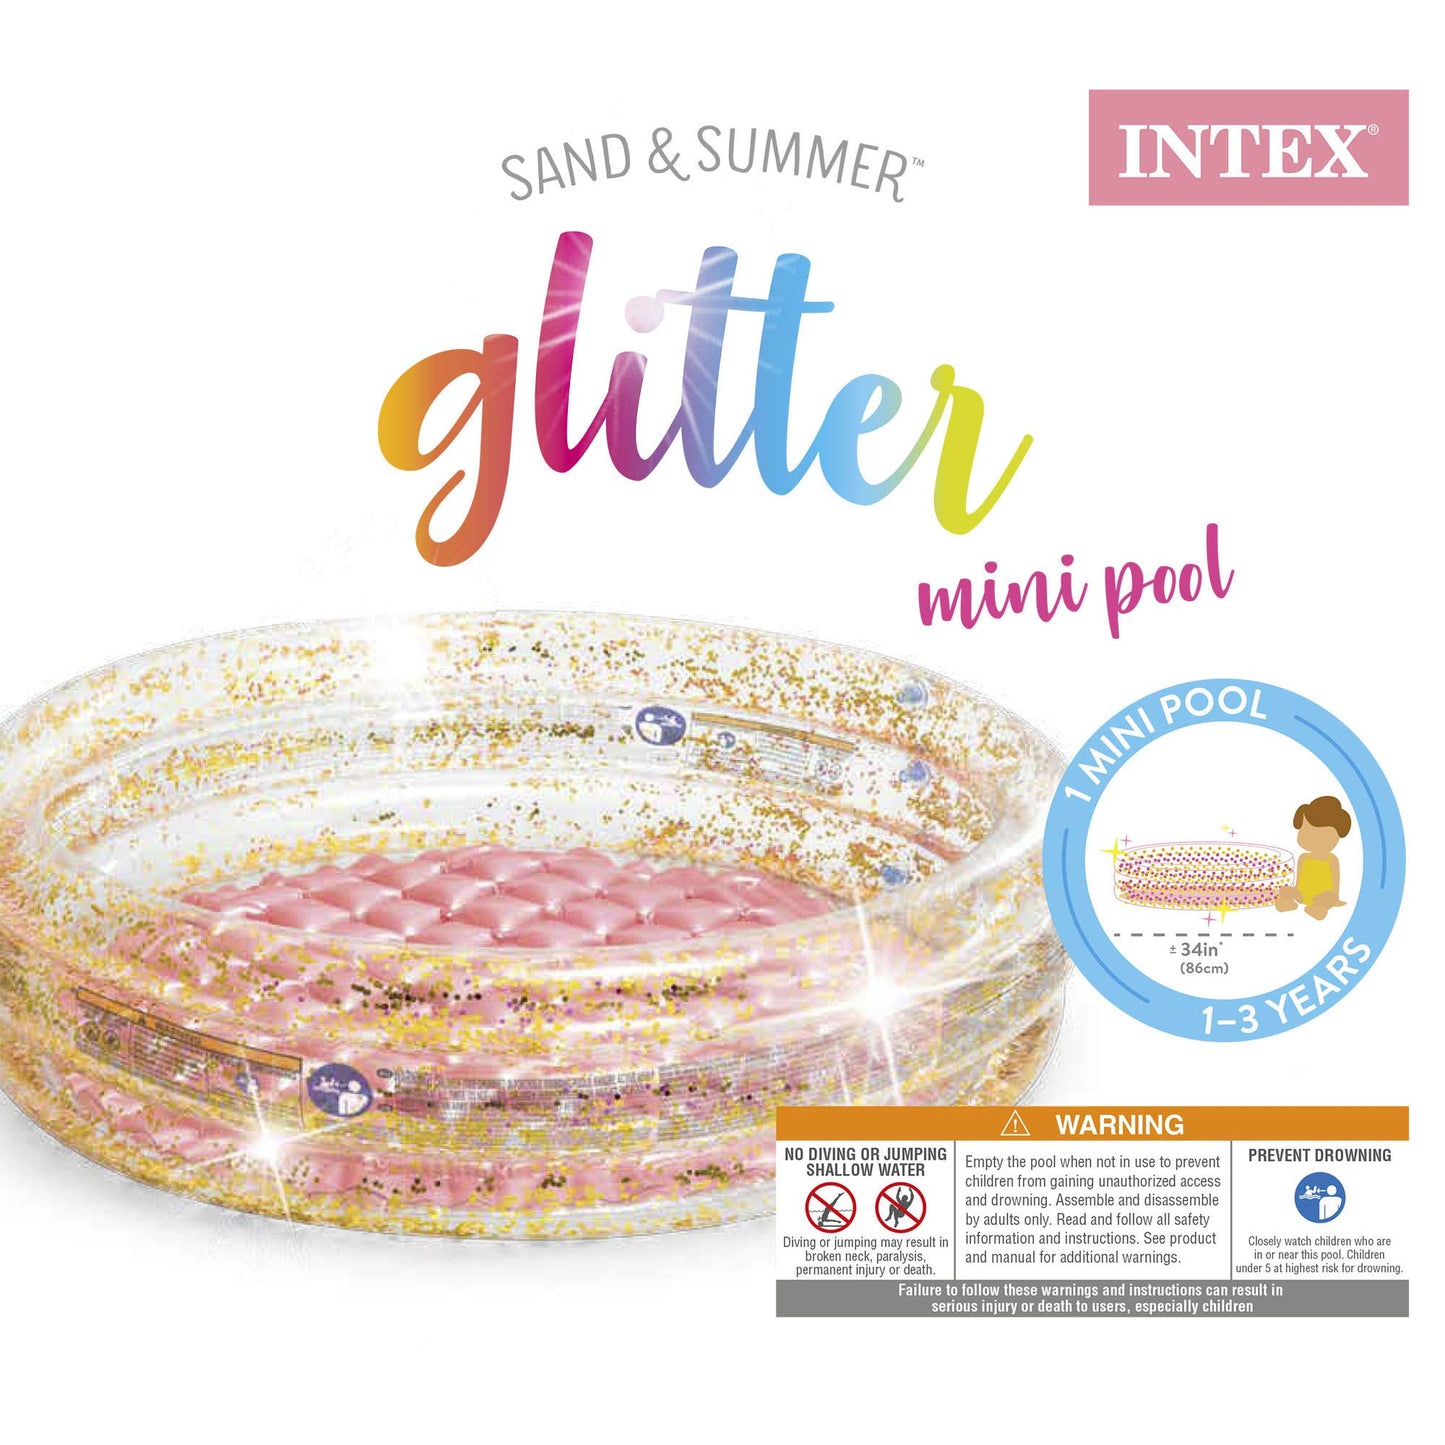 Intex Glitter Mini Pool, Inflatable Kids Pool, Ages 1-3